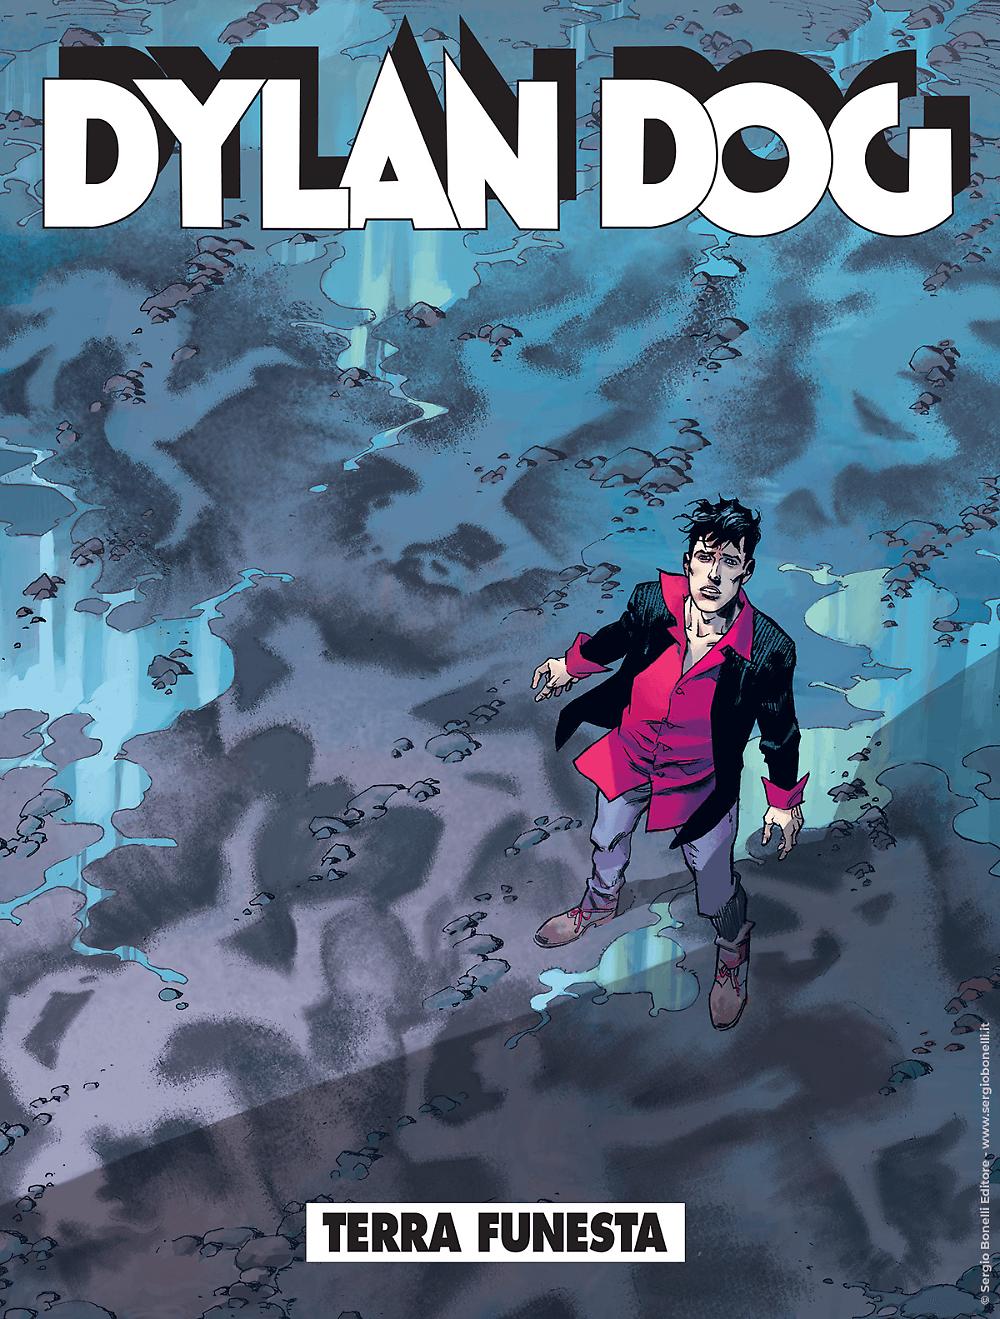 DYLAN DOG #451